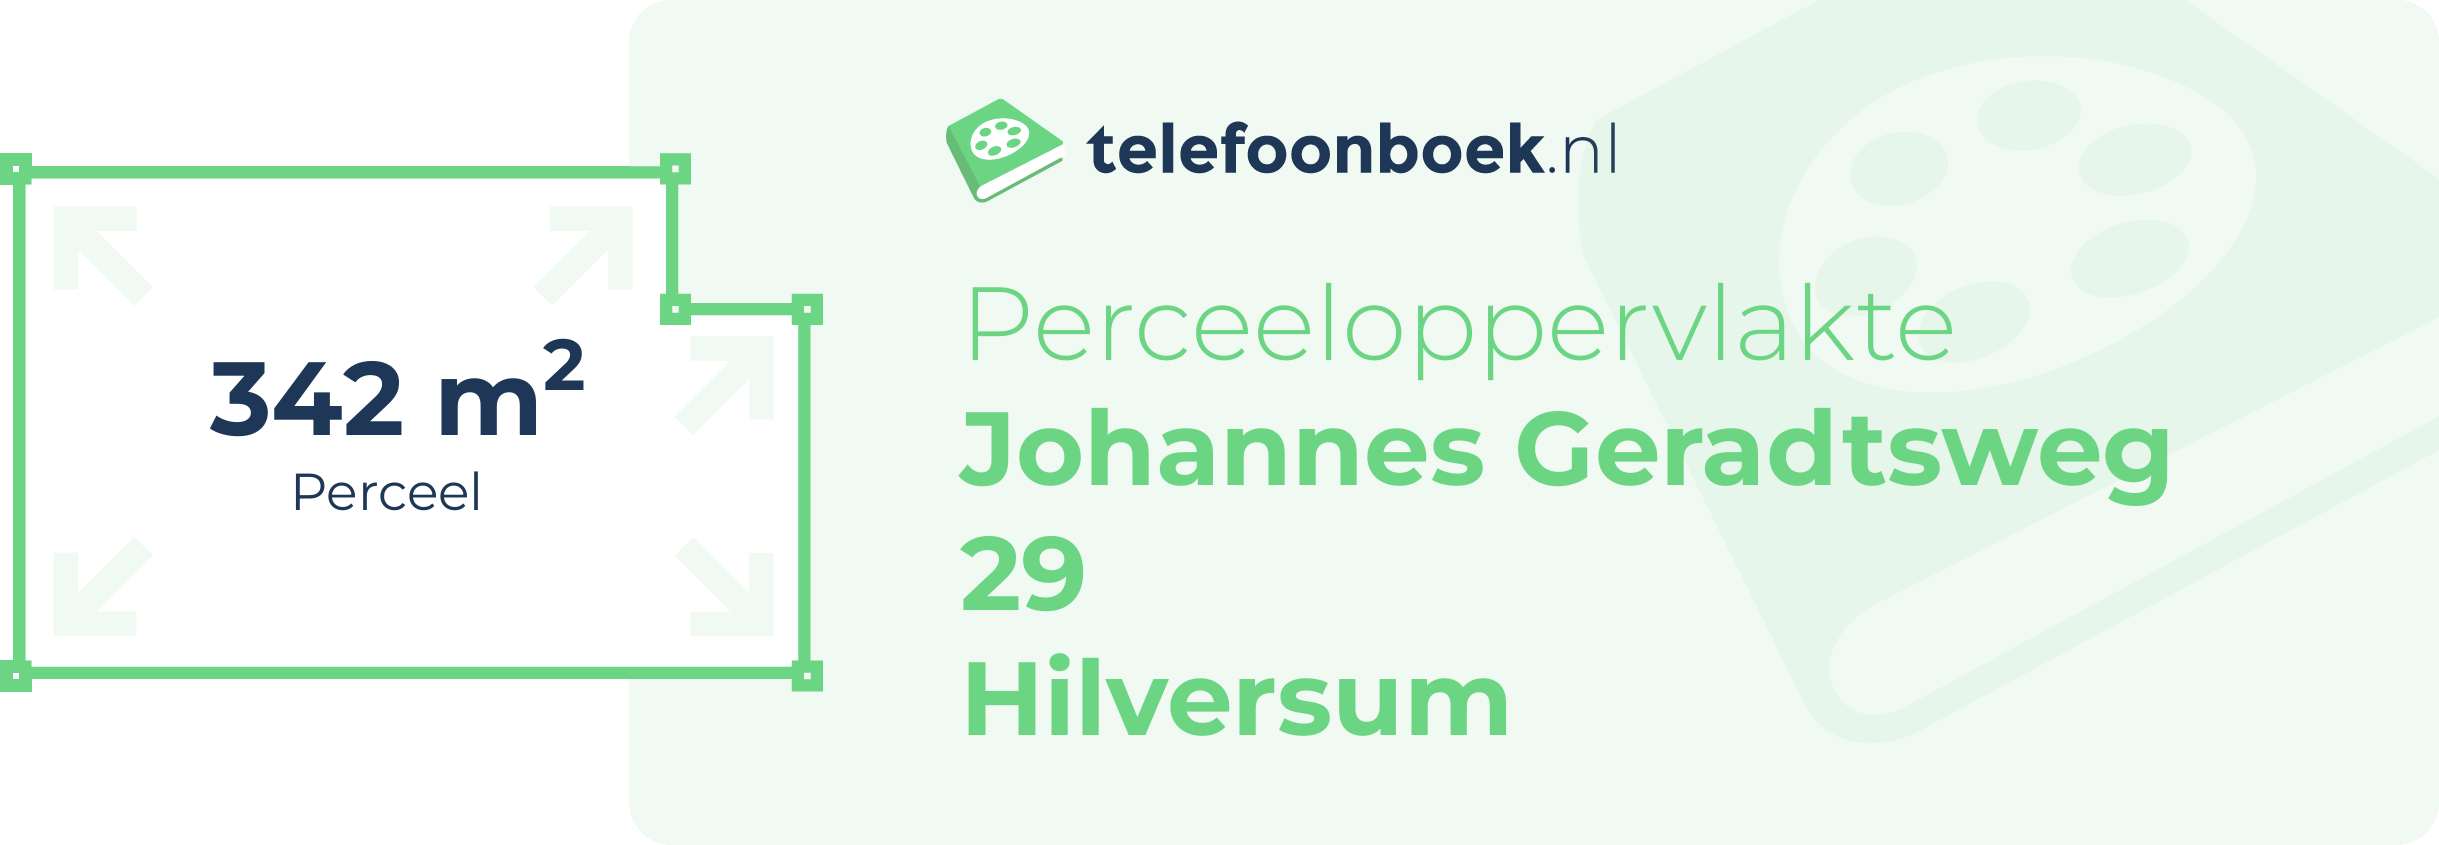 Perceeloppervlakte Johannes Geradtsweg 29 Hilversum